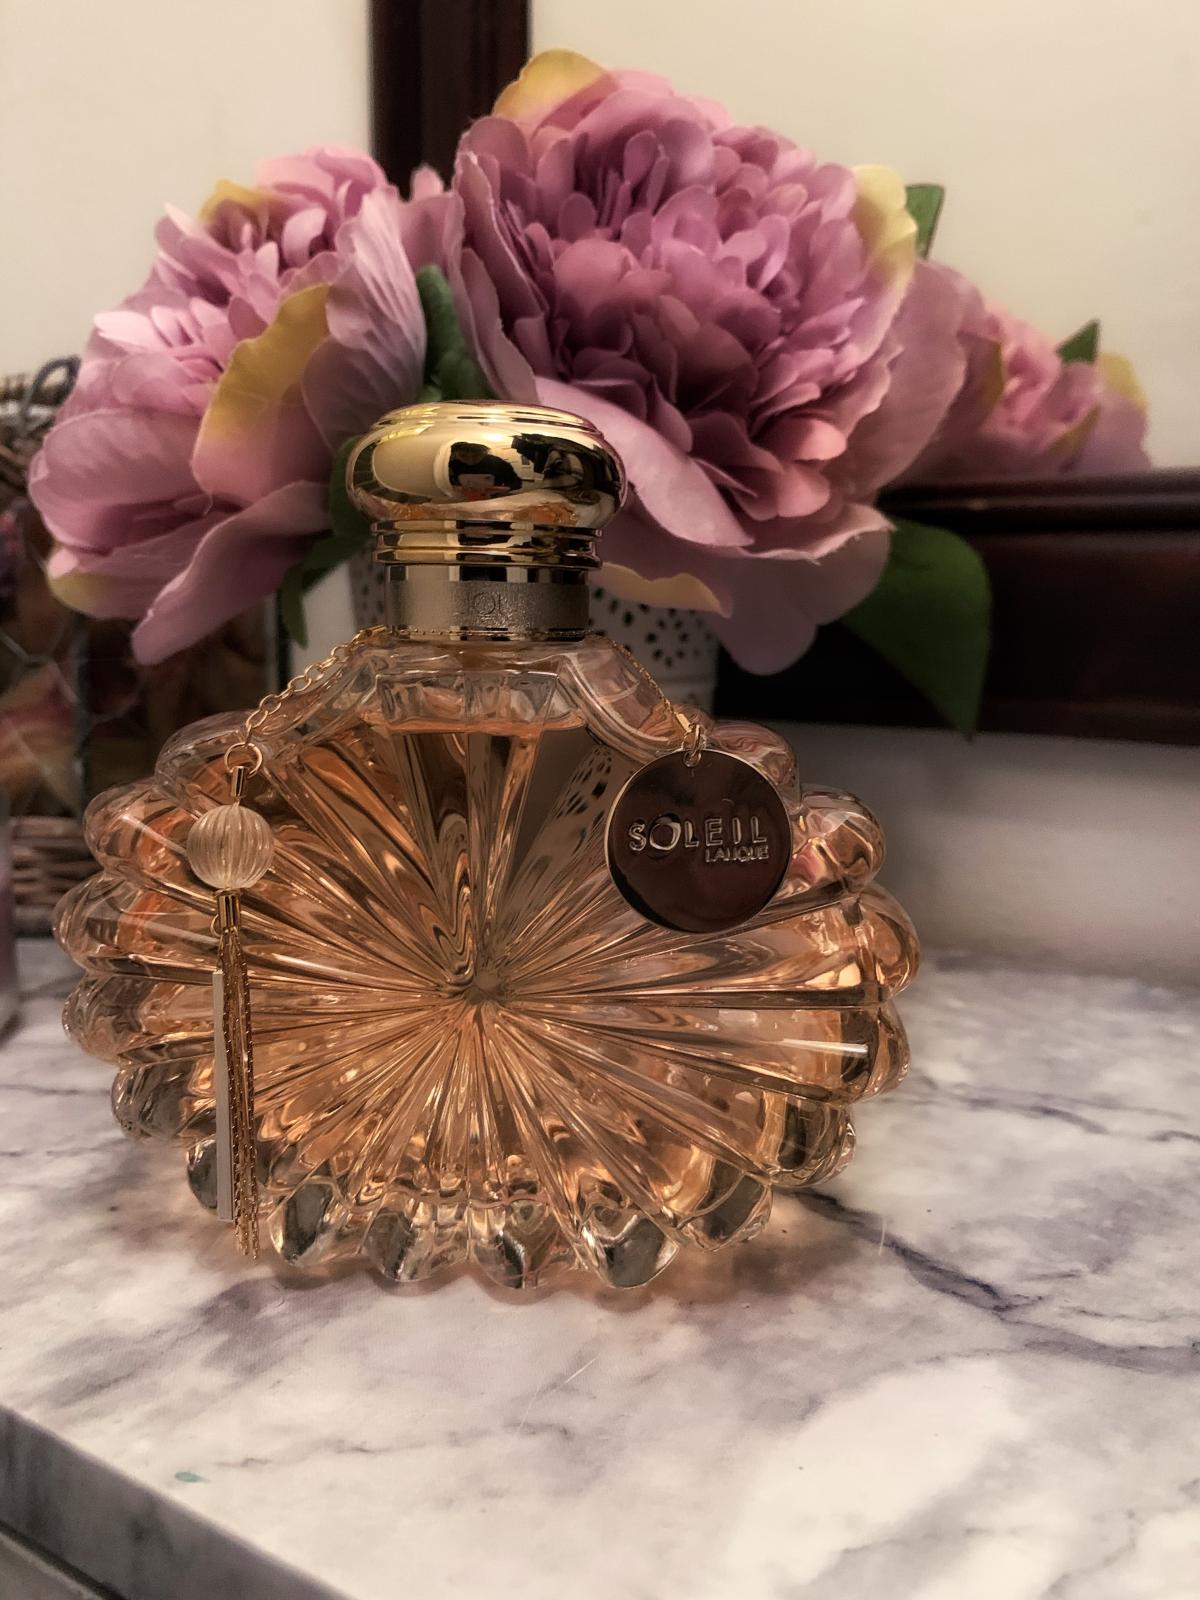 Soleil Lalique perfume - a fragrance for women 2019